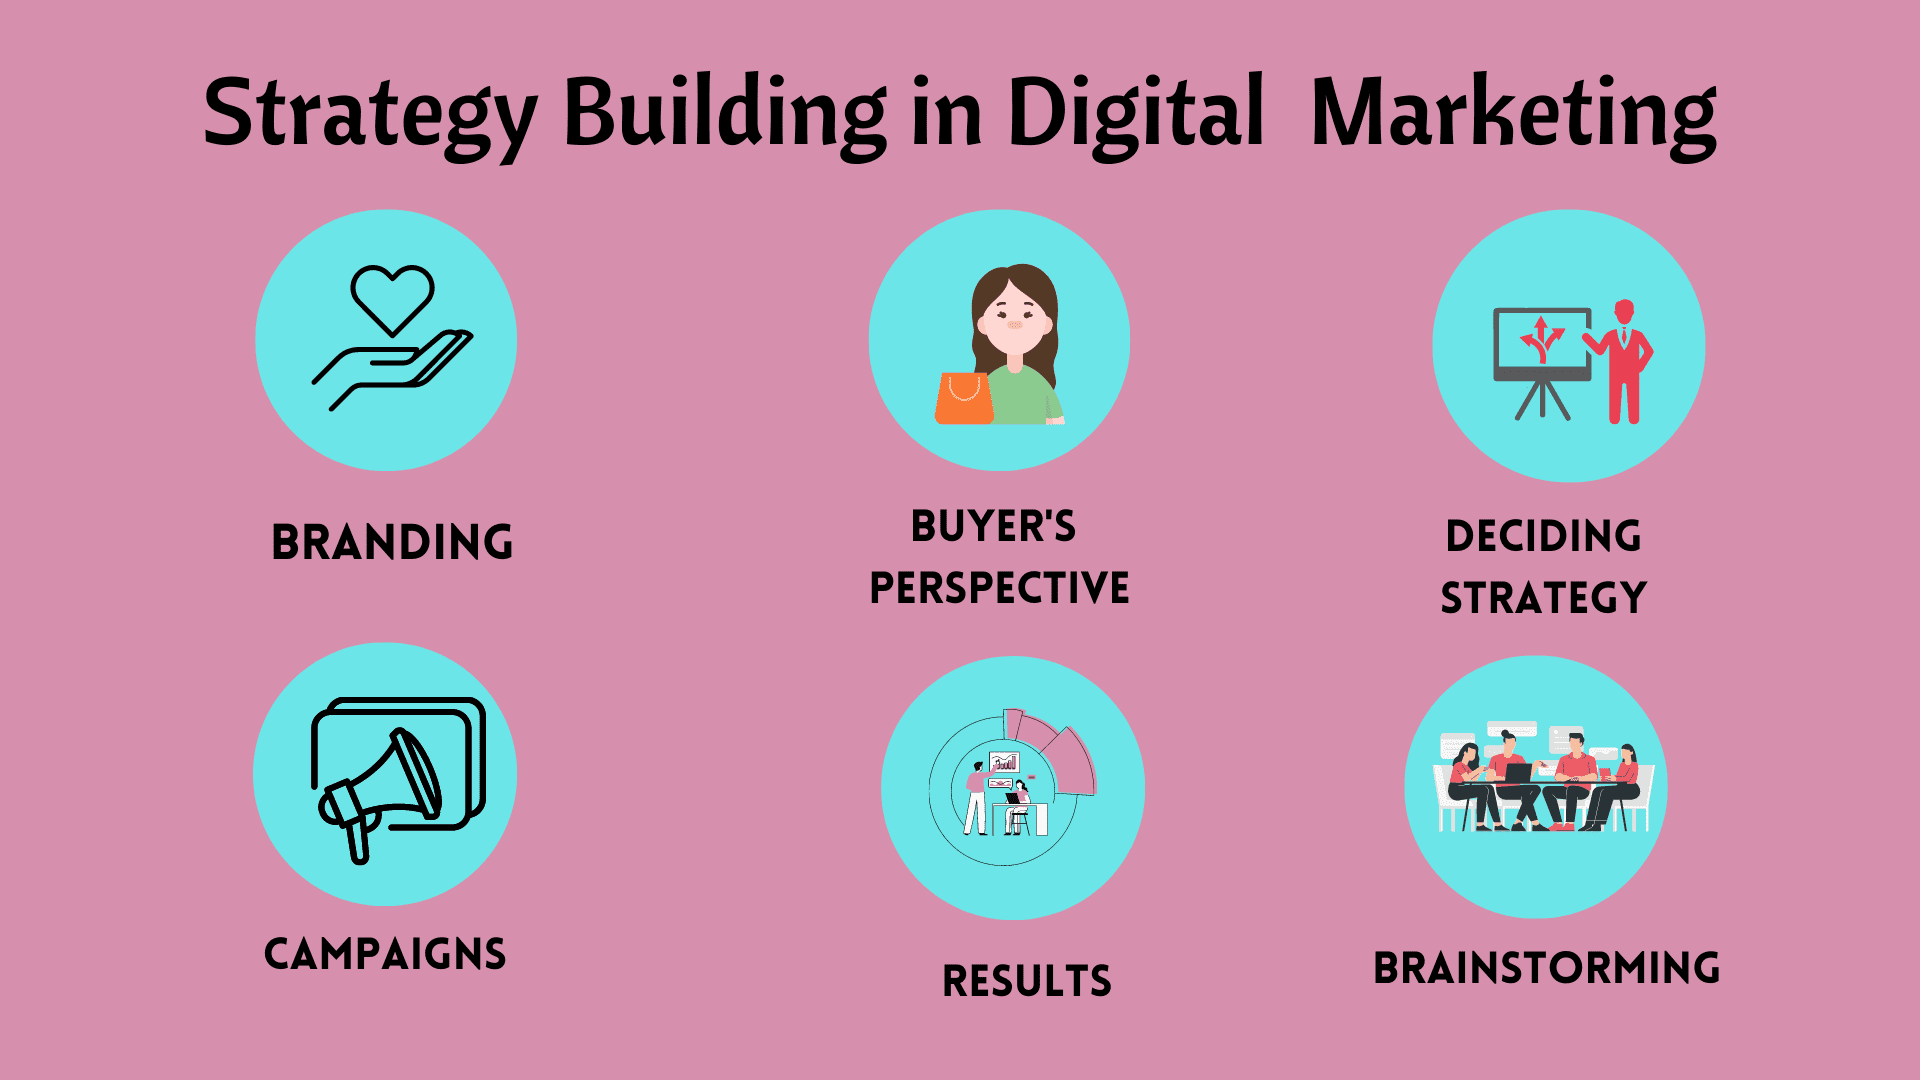 Strategy building in digital marketing